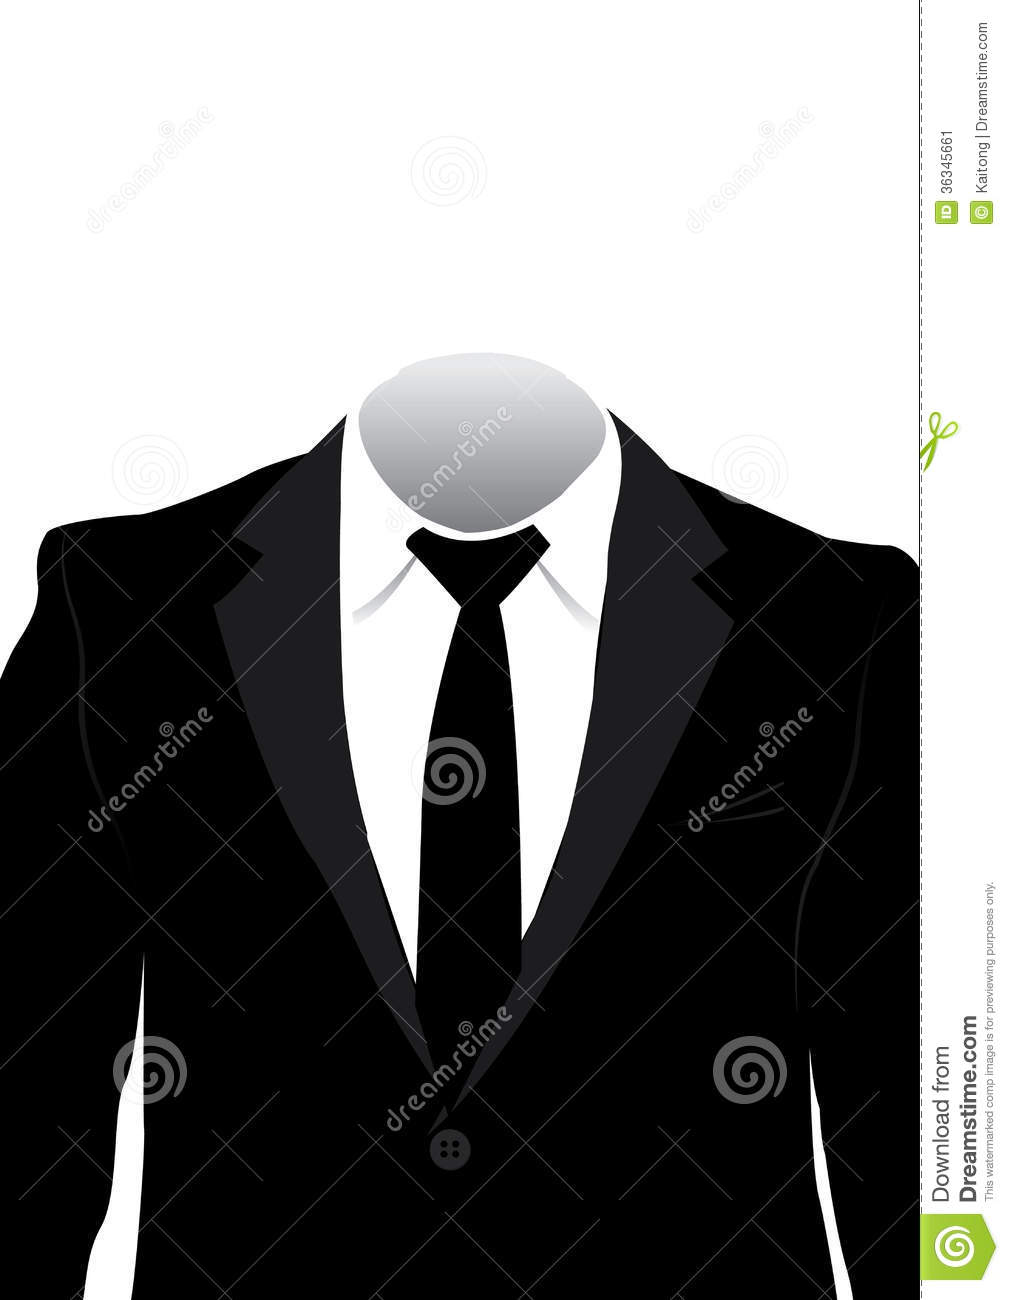 Trends For   Suit And Tie Clipar